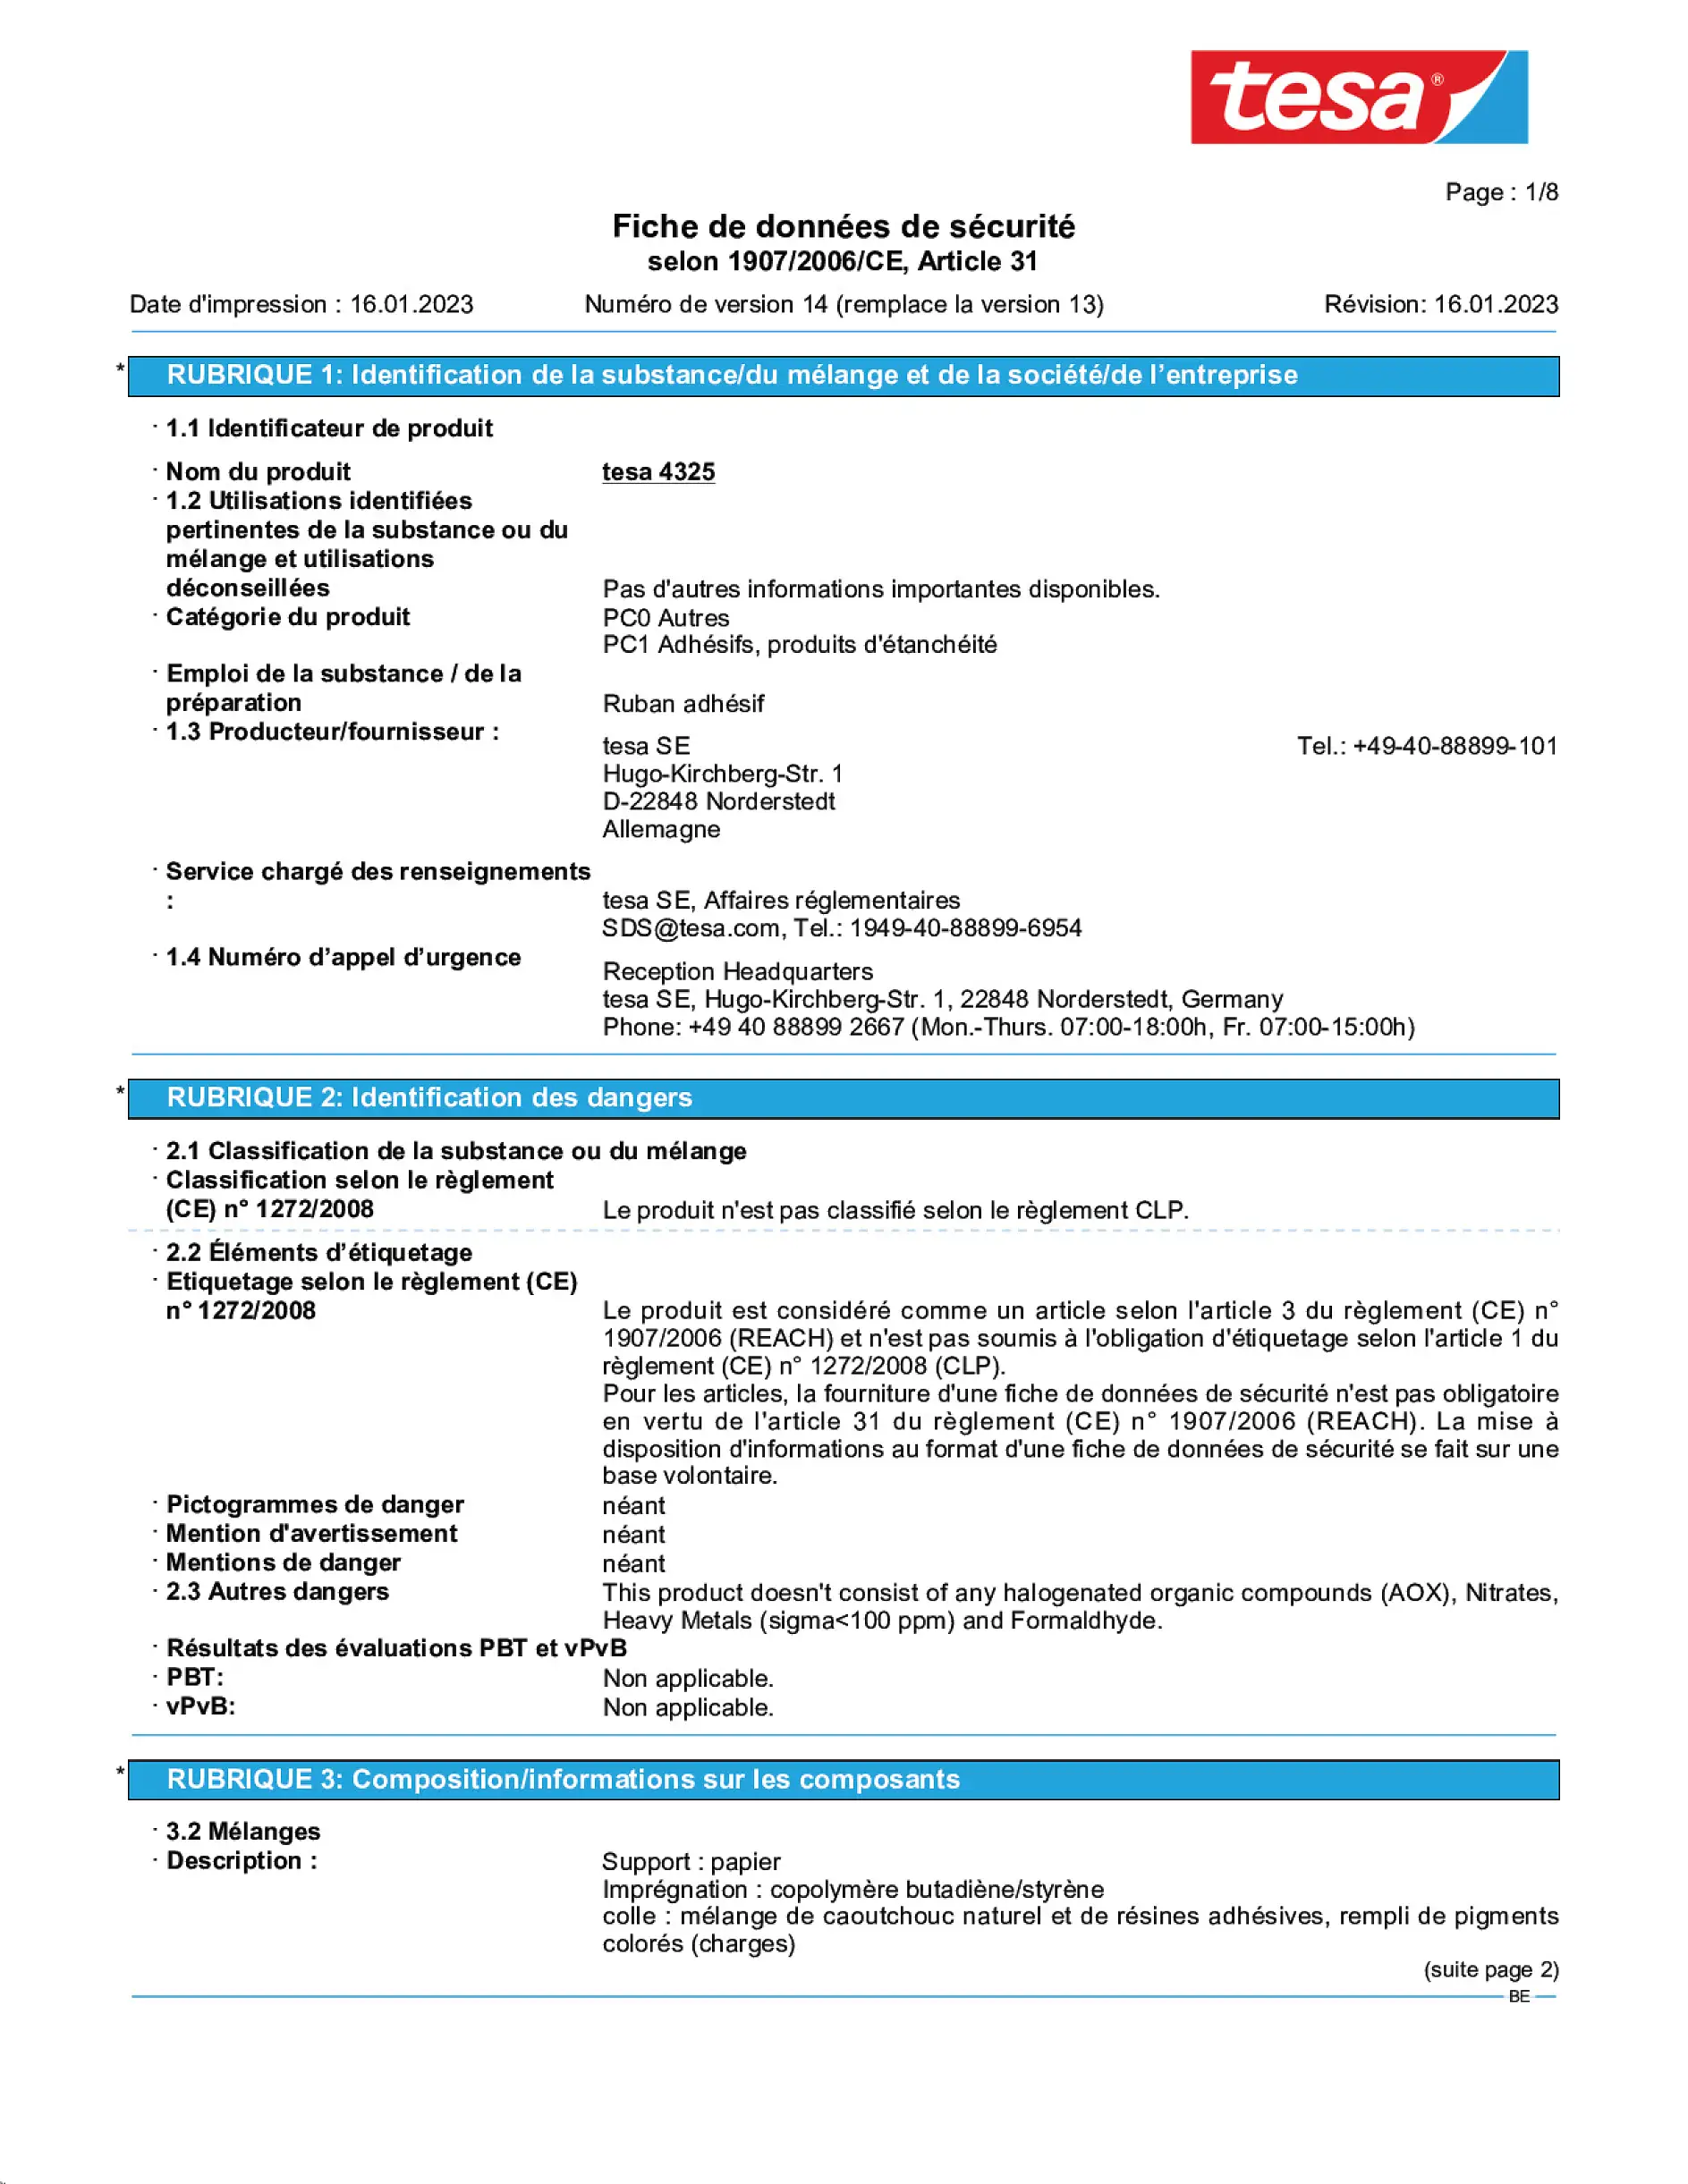 Safety data sheet_tesa® Professional 04325_nl-BE_v14